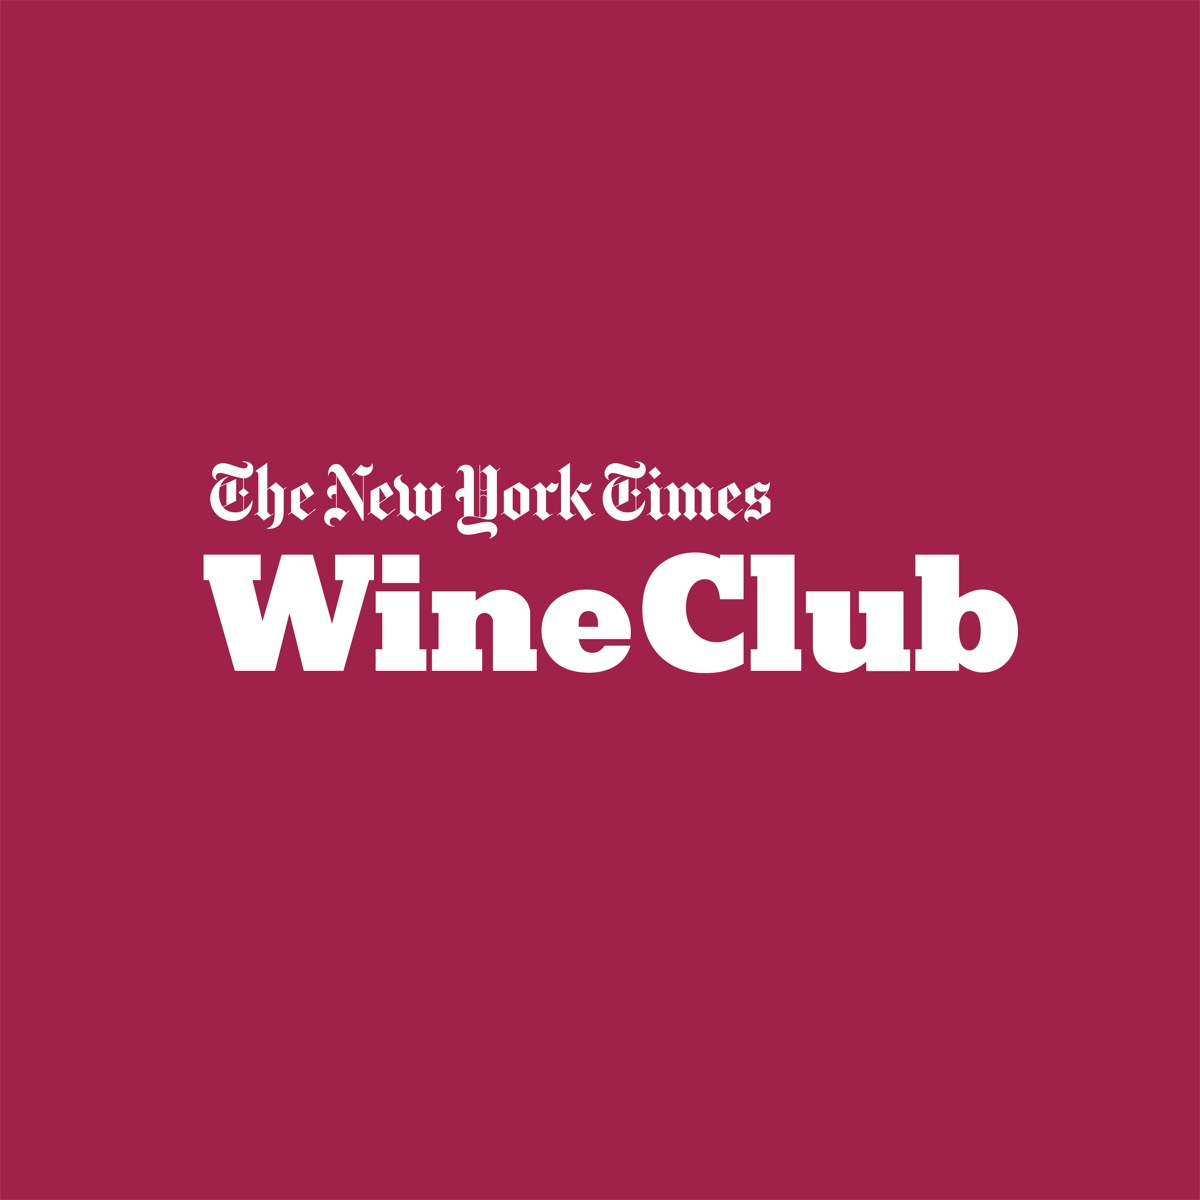 the new york times wine club logo on burgundy background